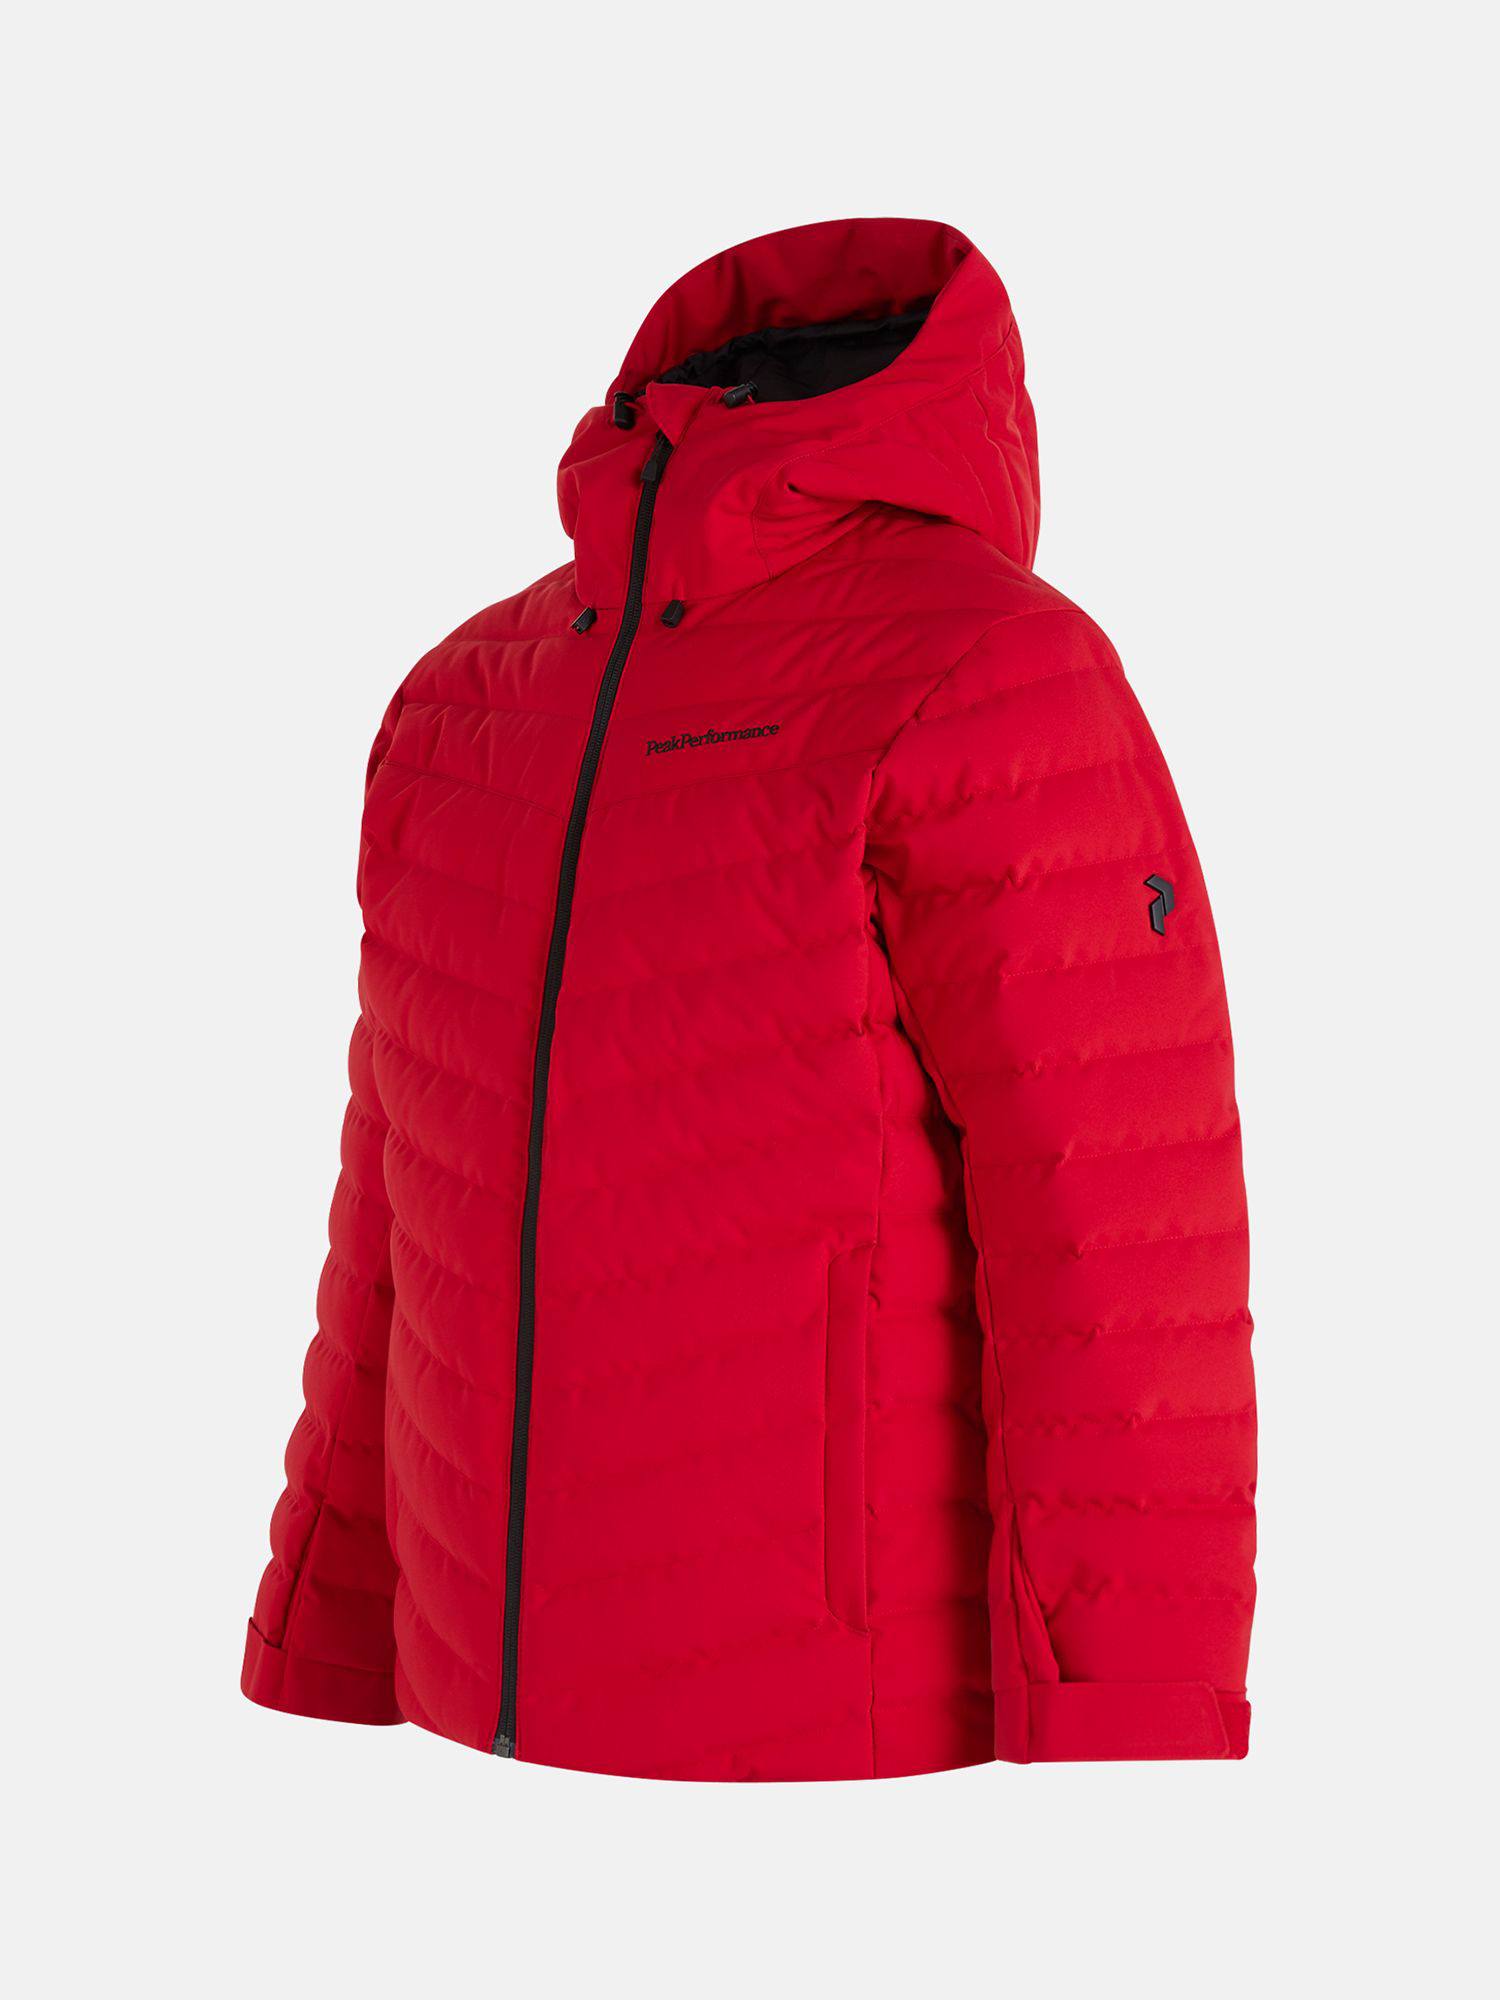 Peak Performance Men’s Frost Ski Jacket Red XL